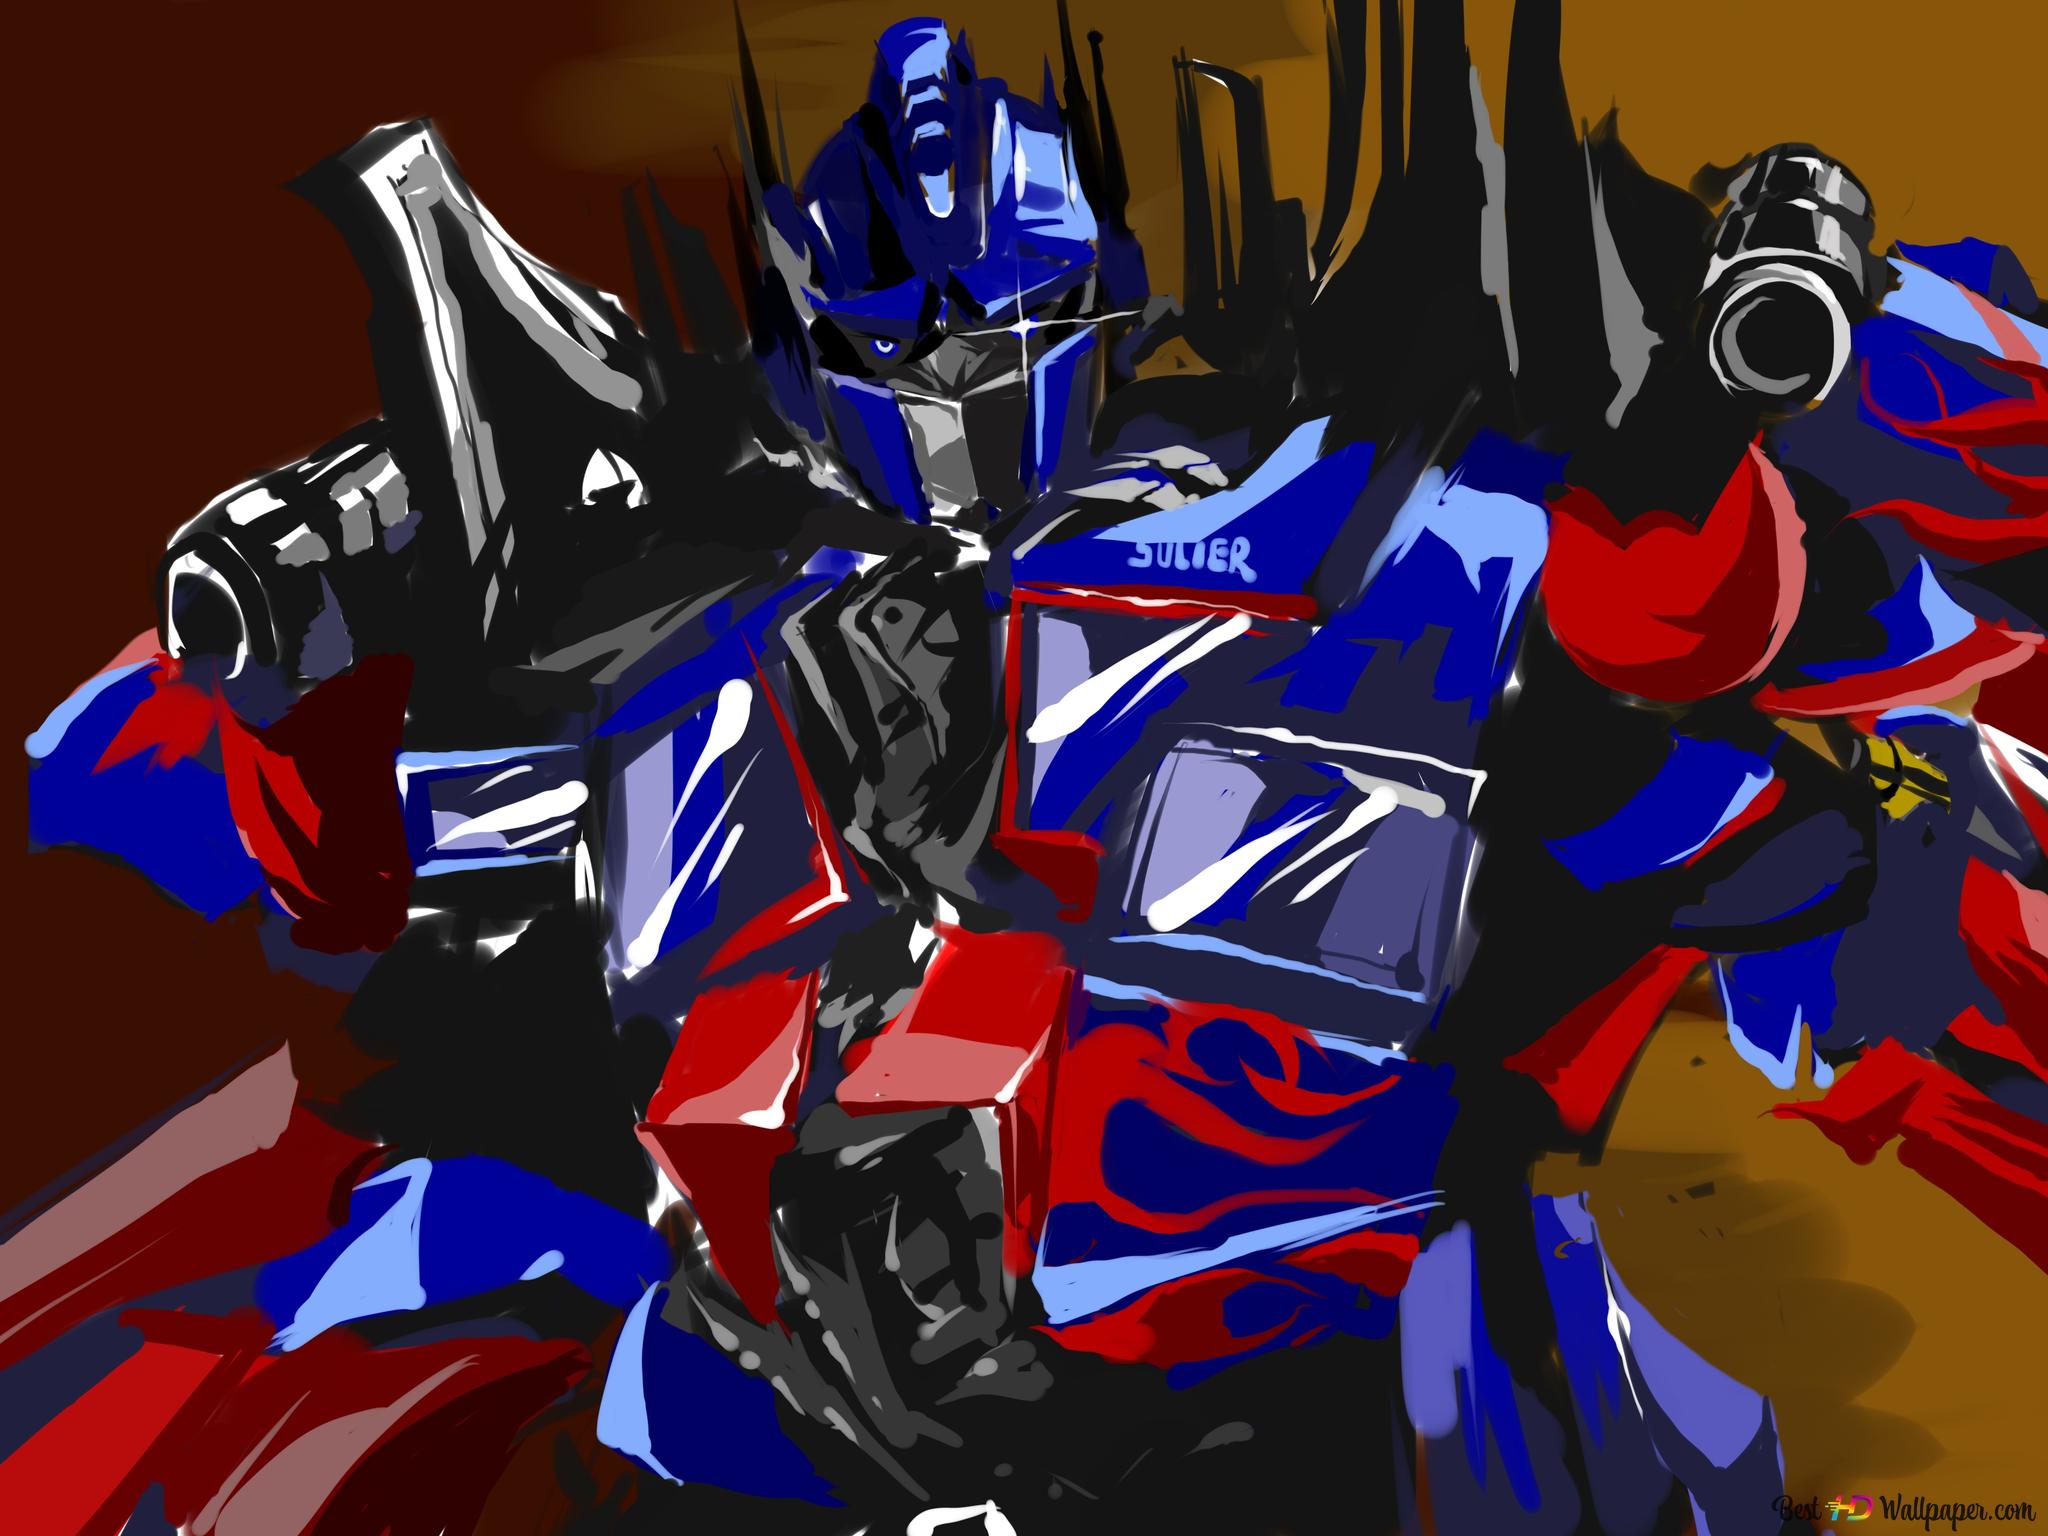  Transformers Hintergrundbild 2048x1536. Optimus Prime von Transformers 4K Hintergrundbild herunterladen